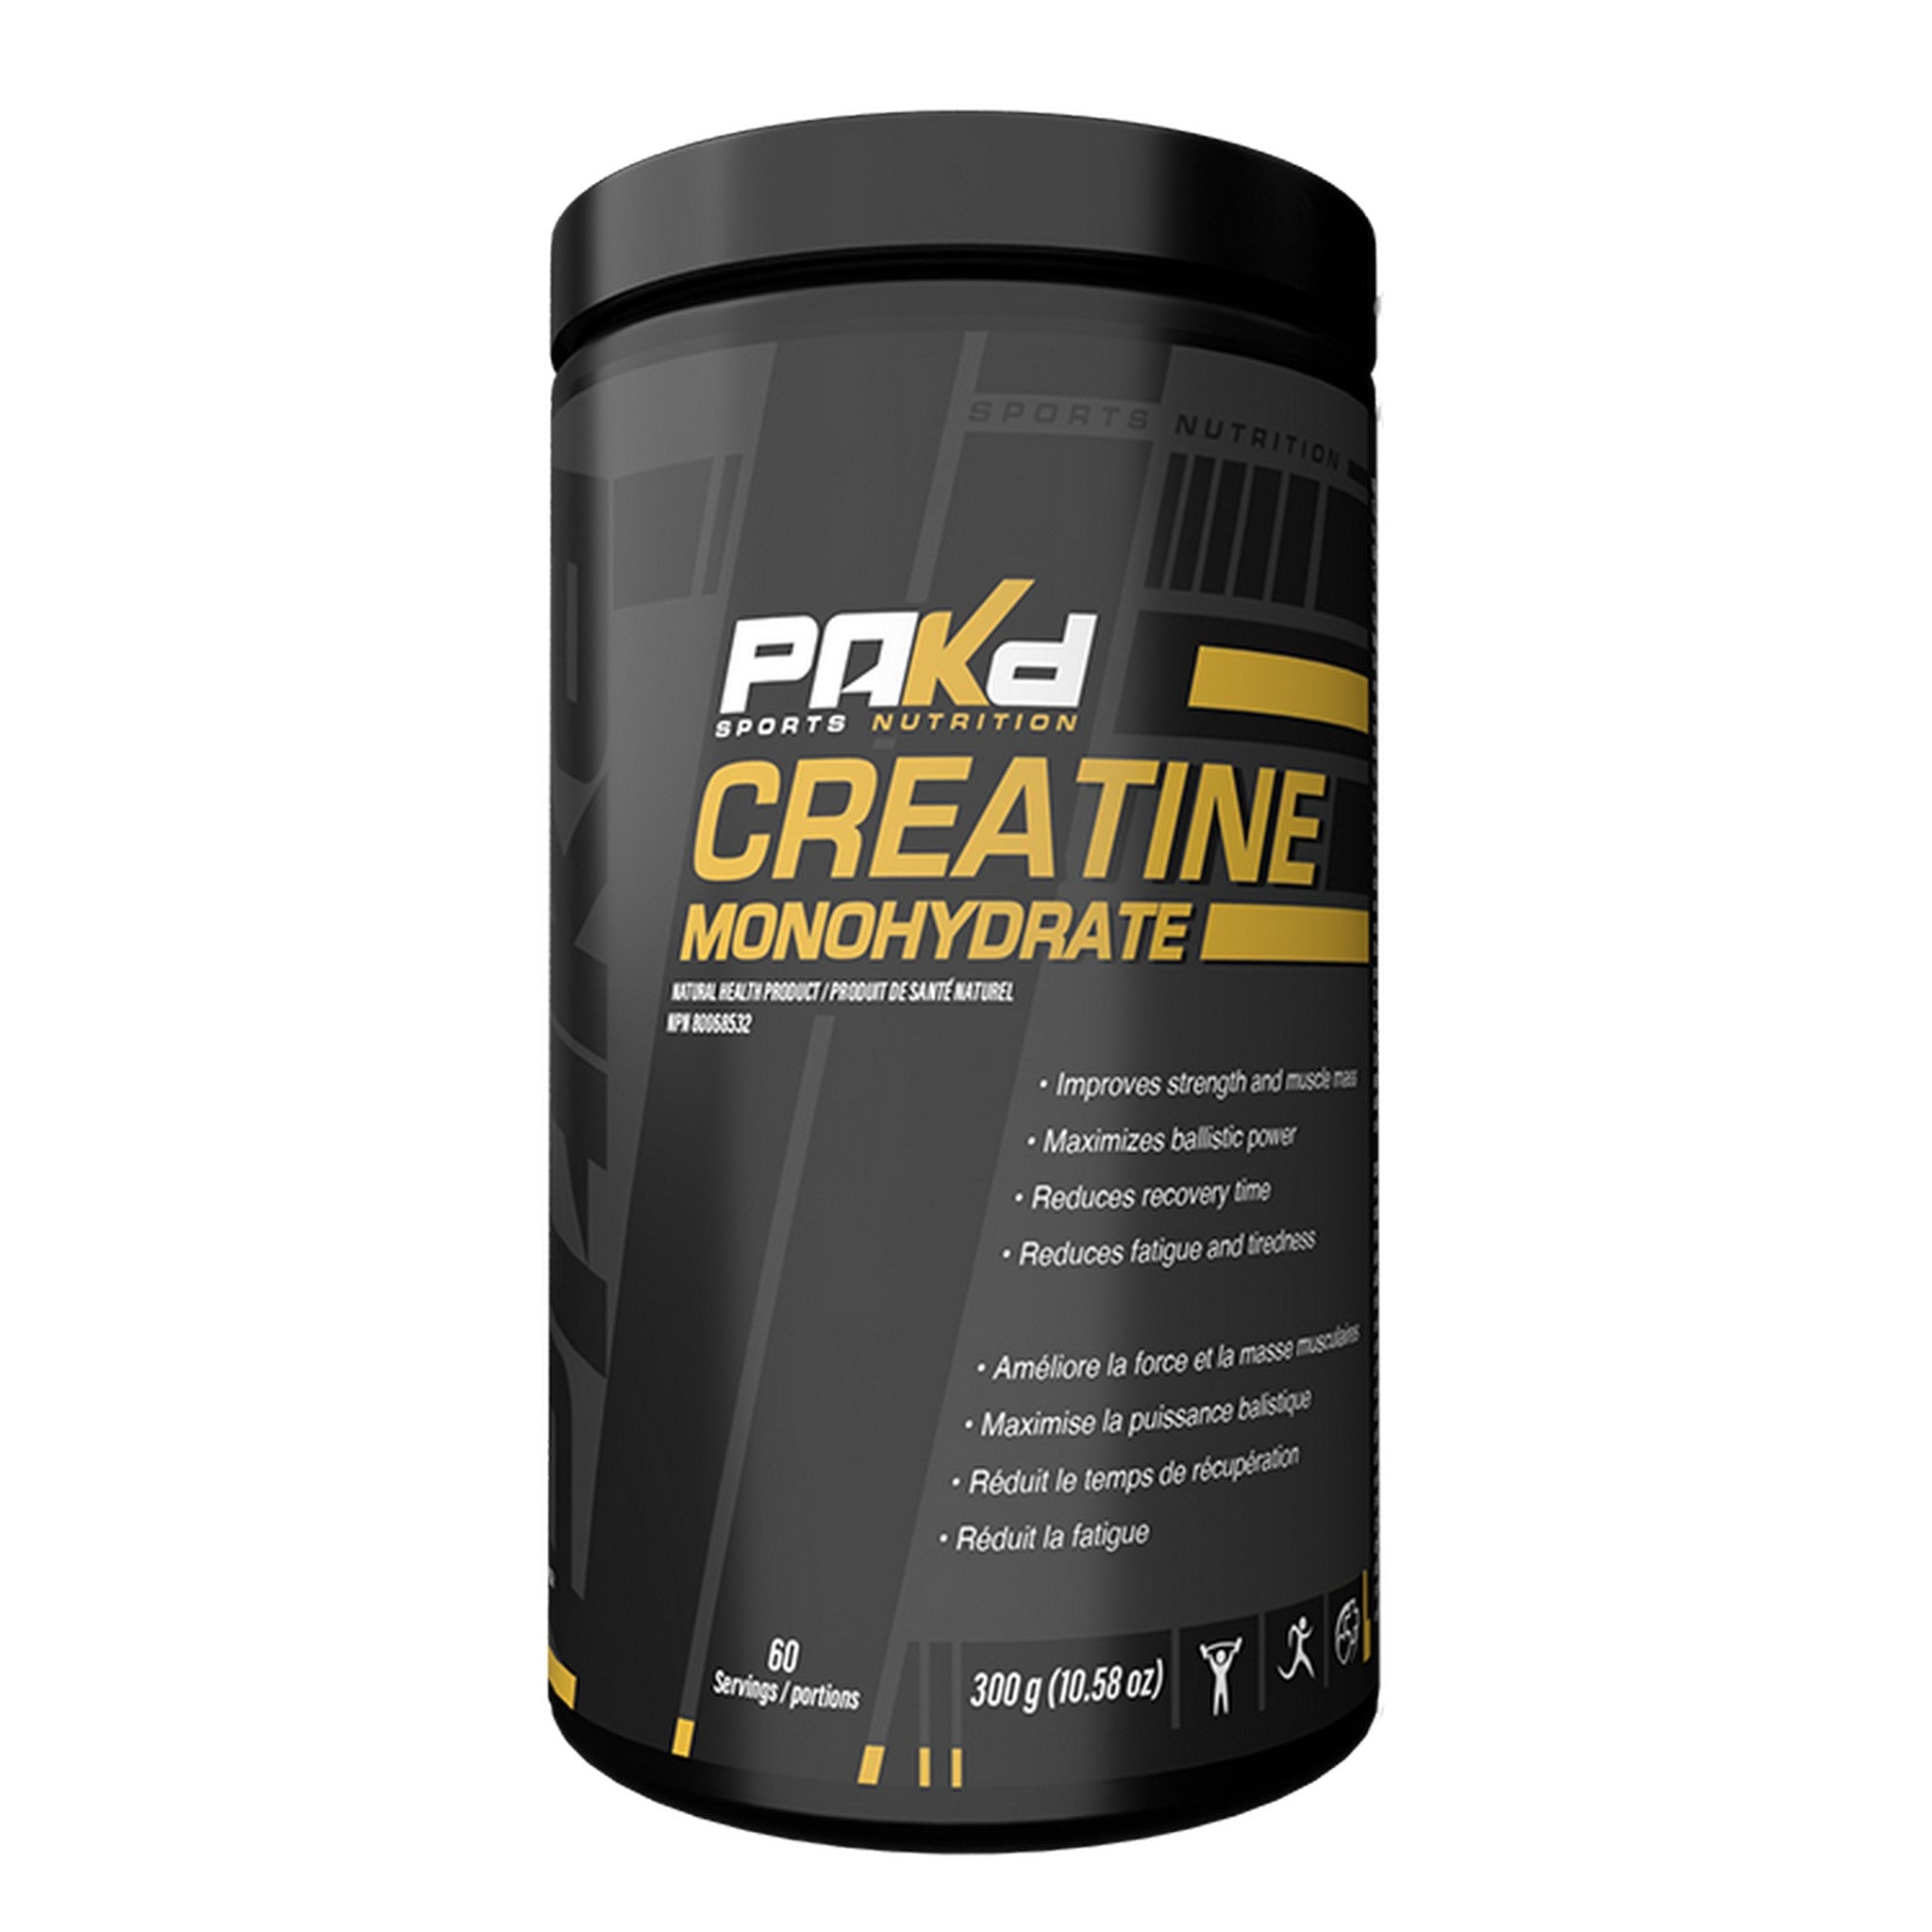 PAKD 300g Creatine Monohydrate